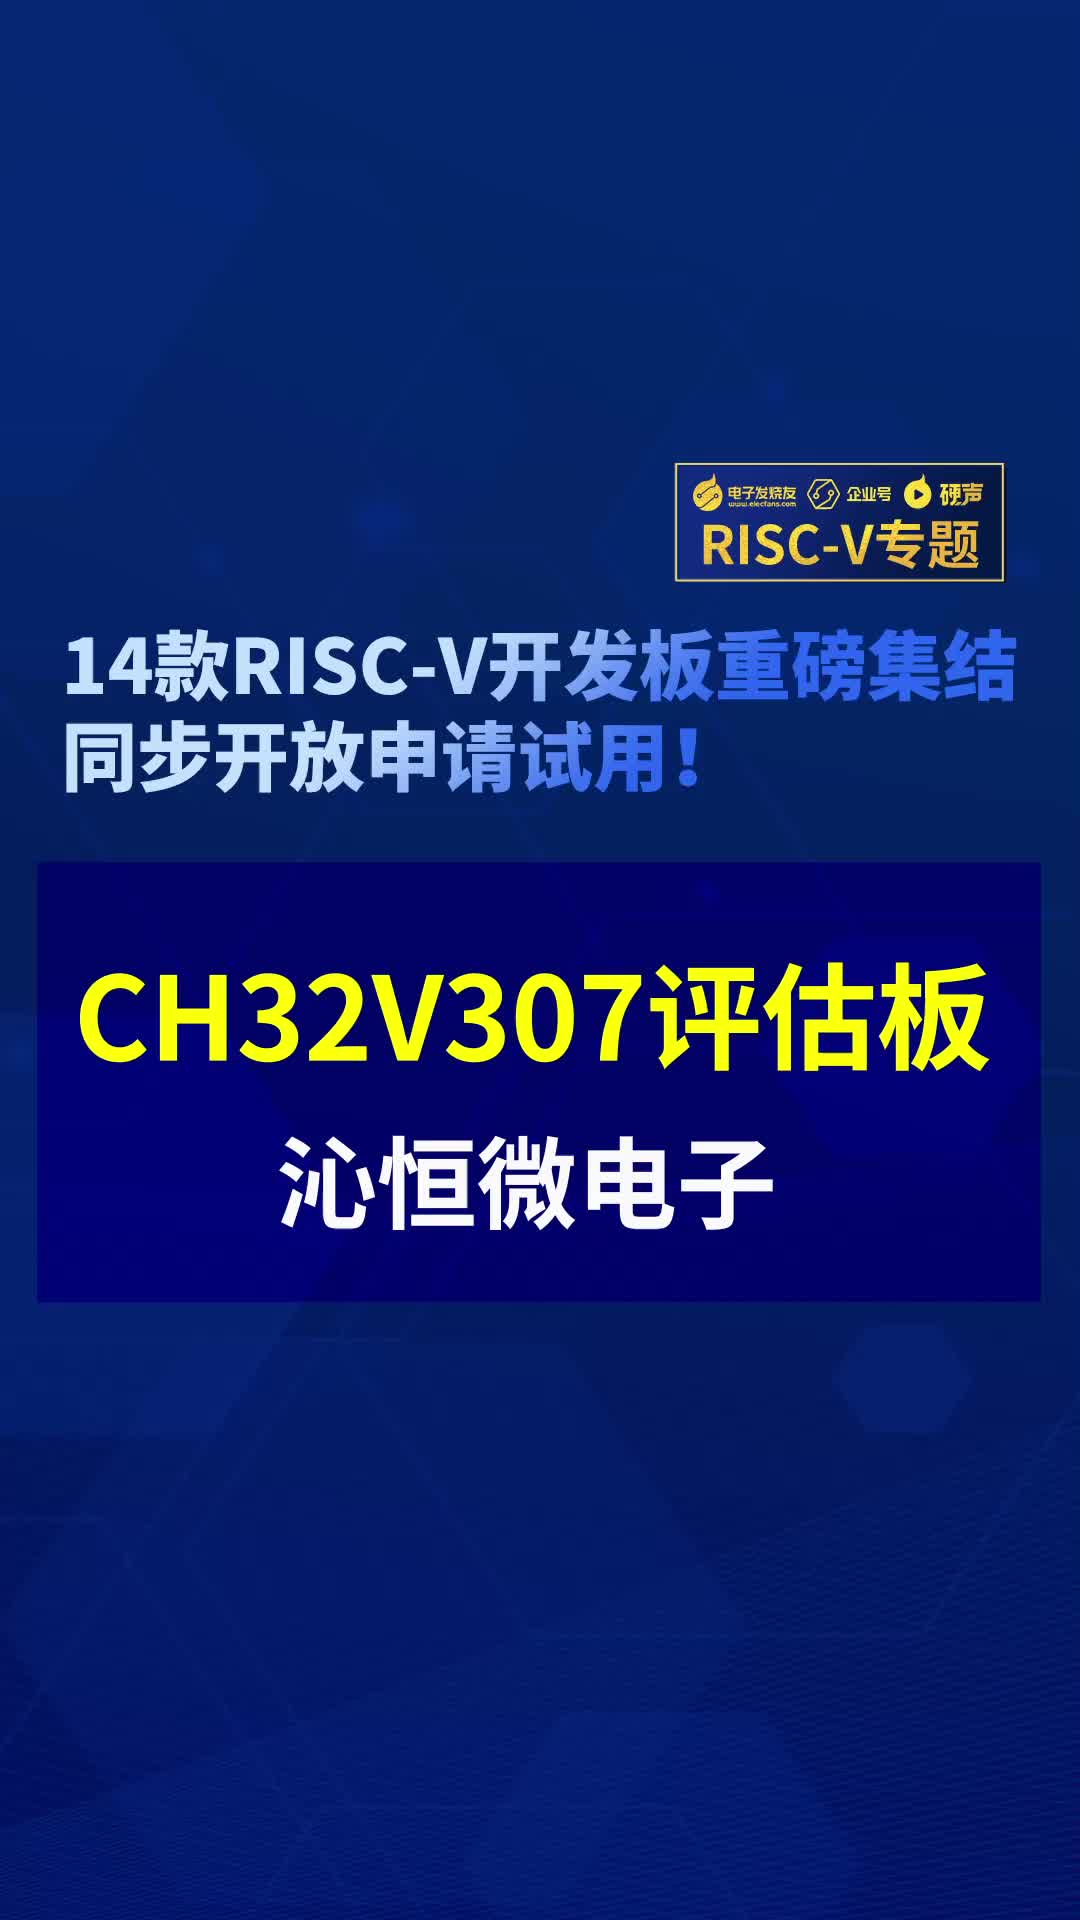 【RISC-V专题】沁恒微CH32V307评估板免费试用#RISC-V开发板评测 